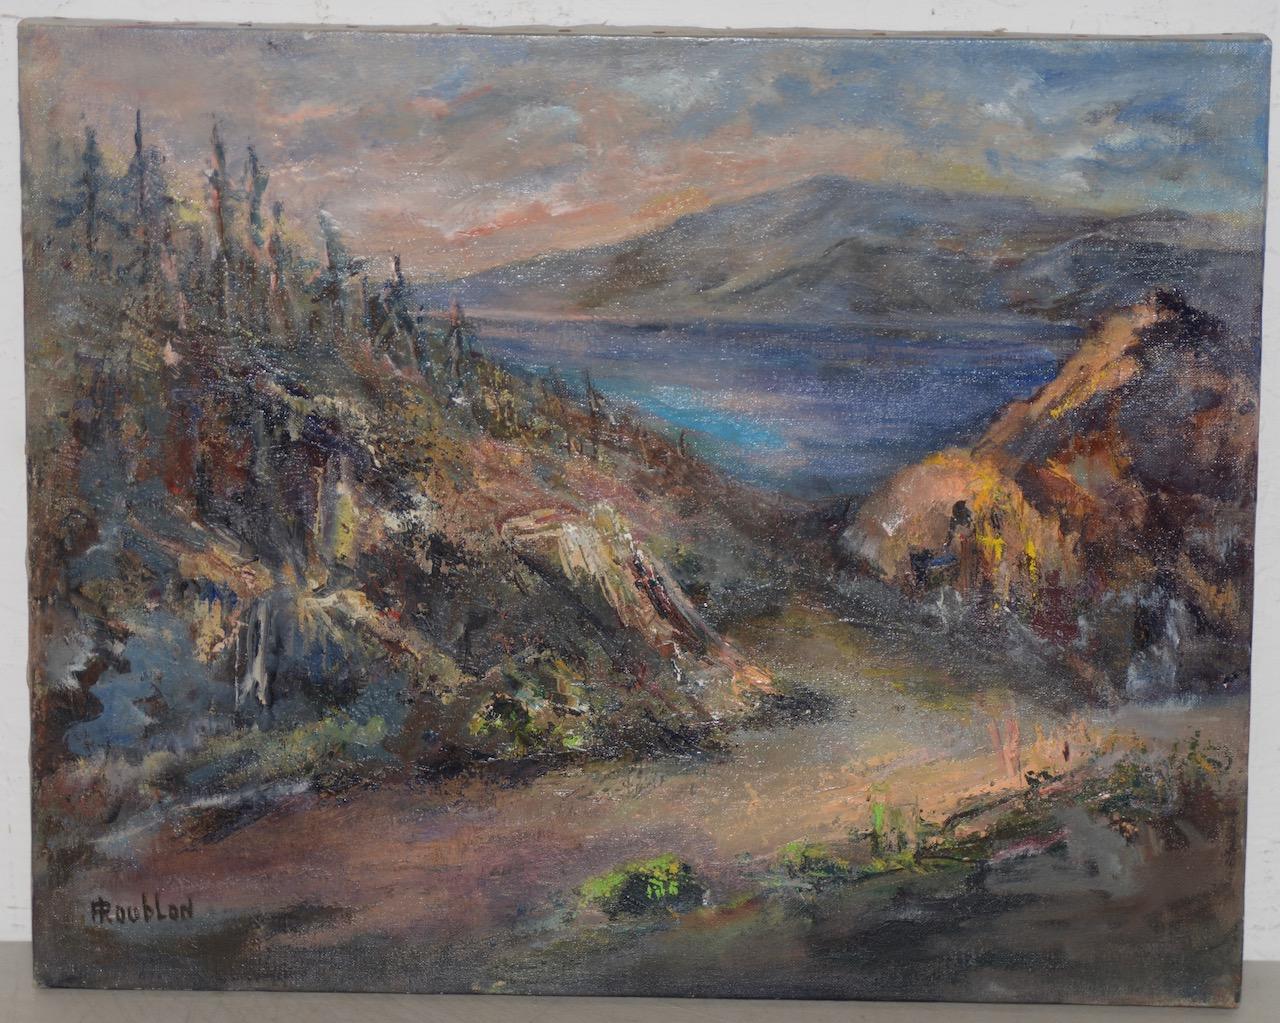 Irina Roublon "Luminous Mountain Landscape" Oil Painting C.1960s